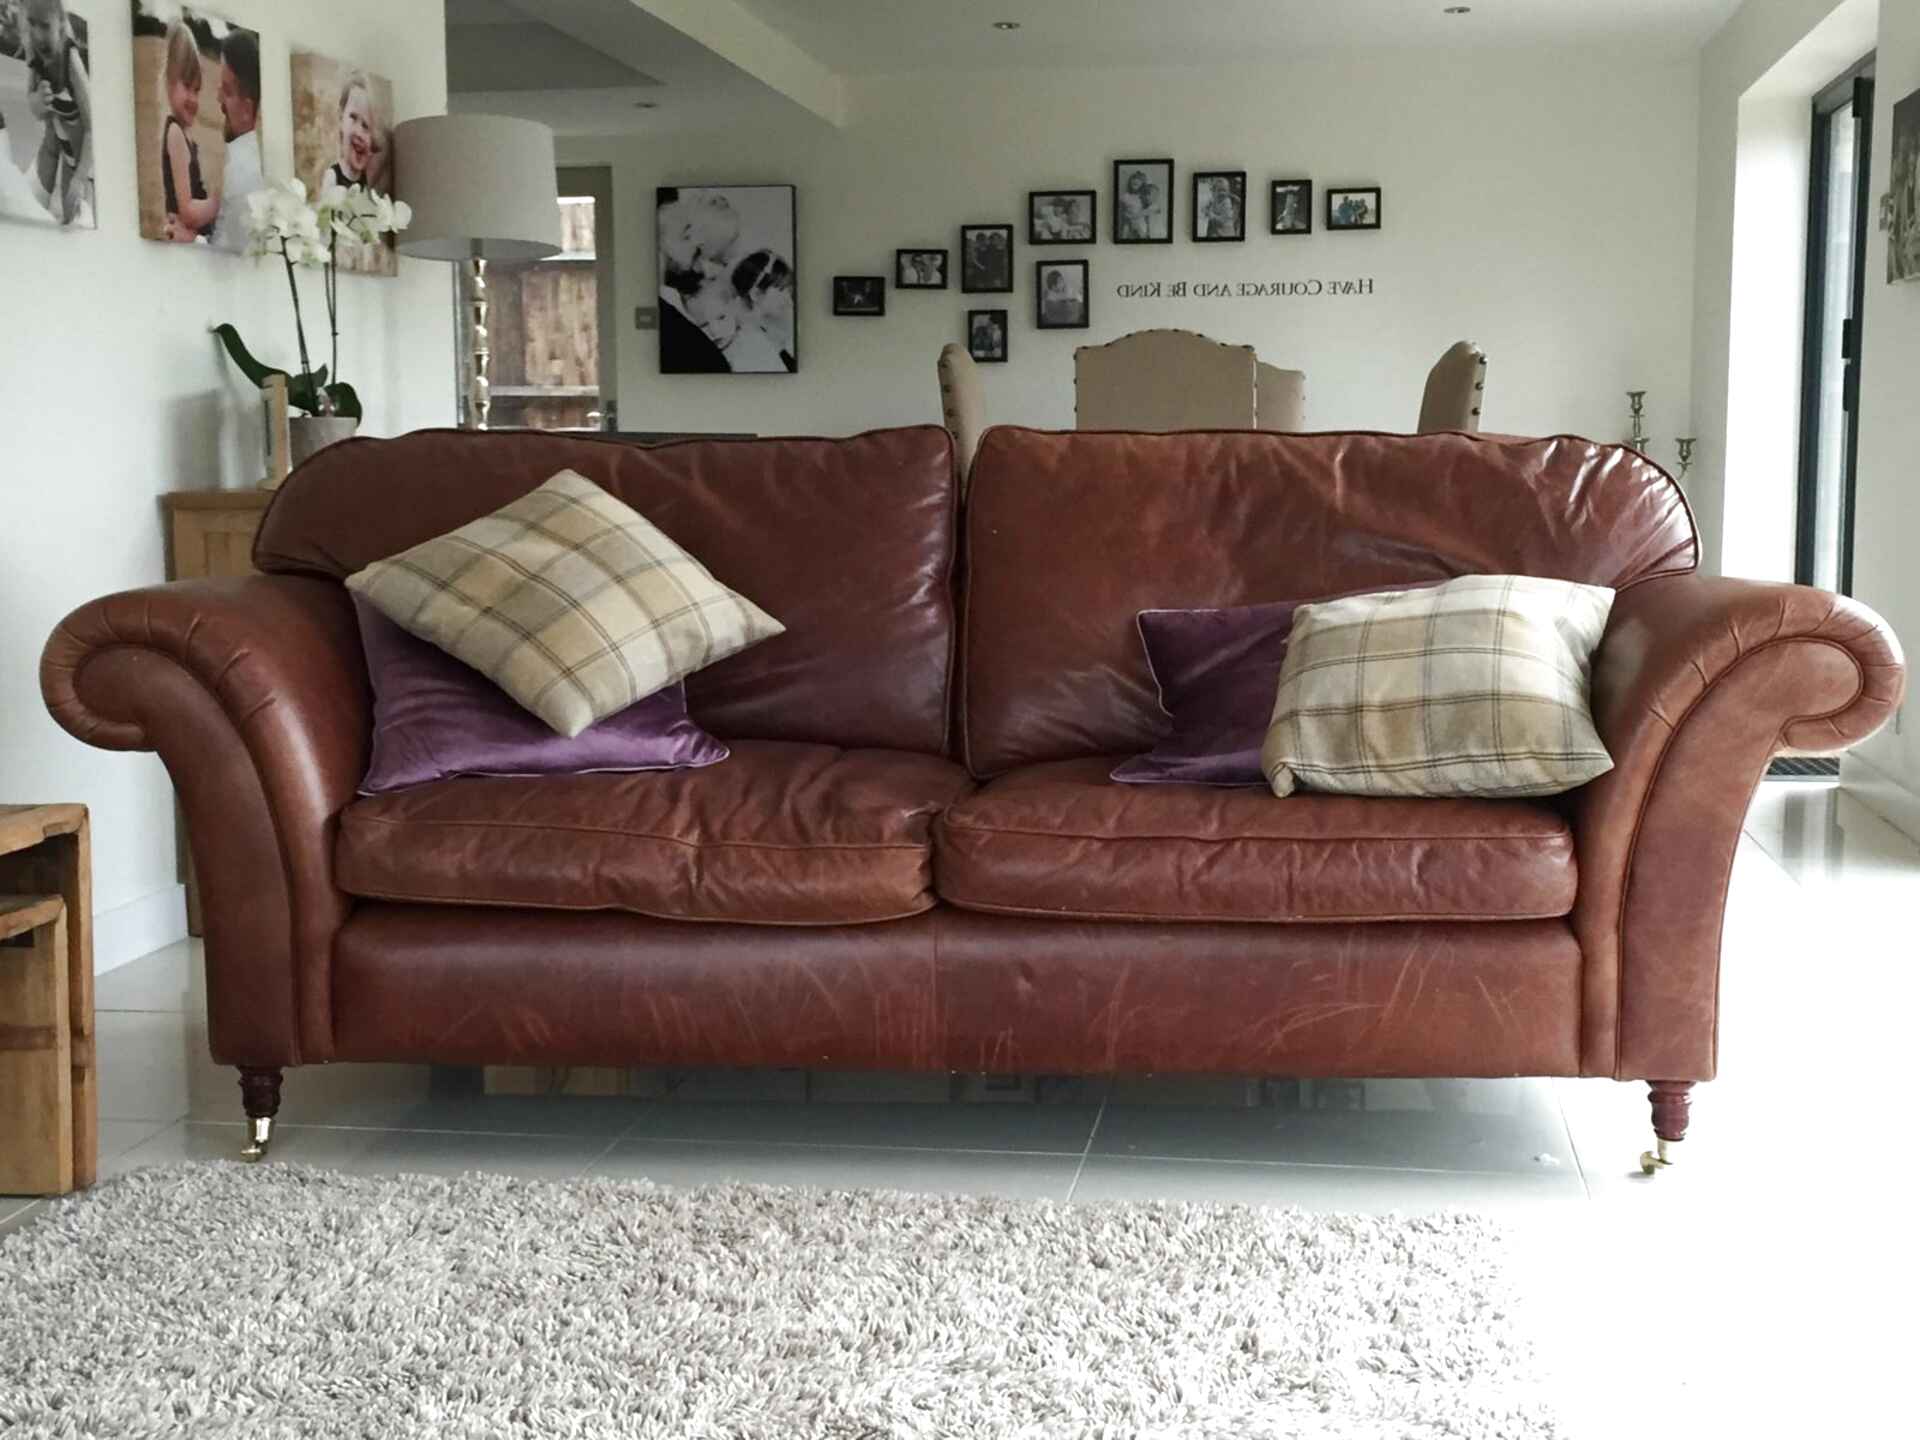 laura ashley sofa bed sale